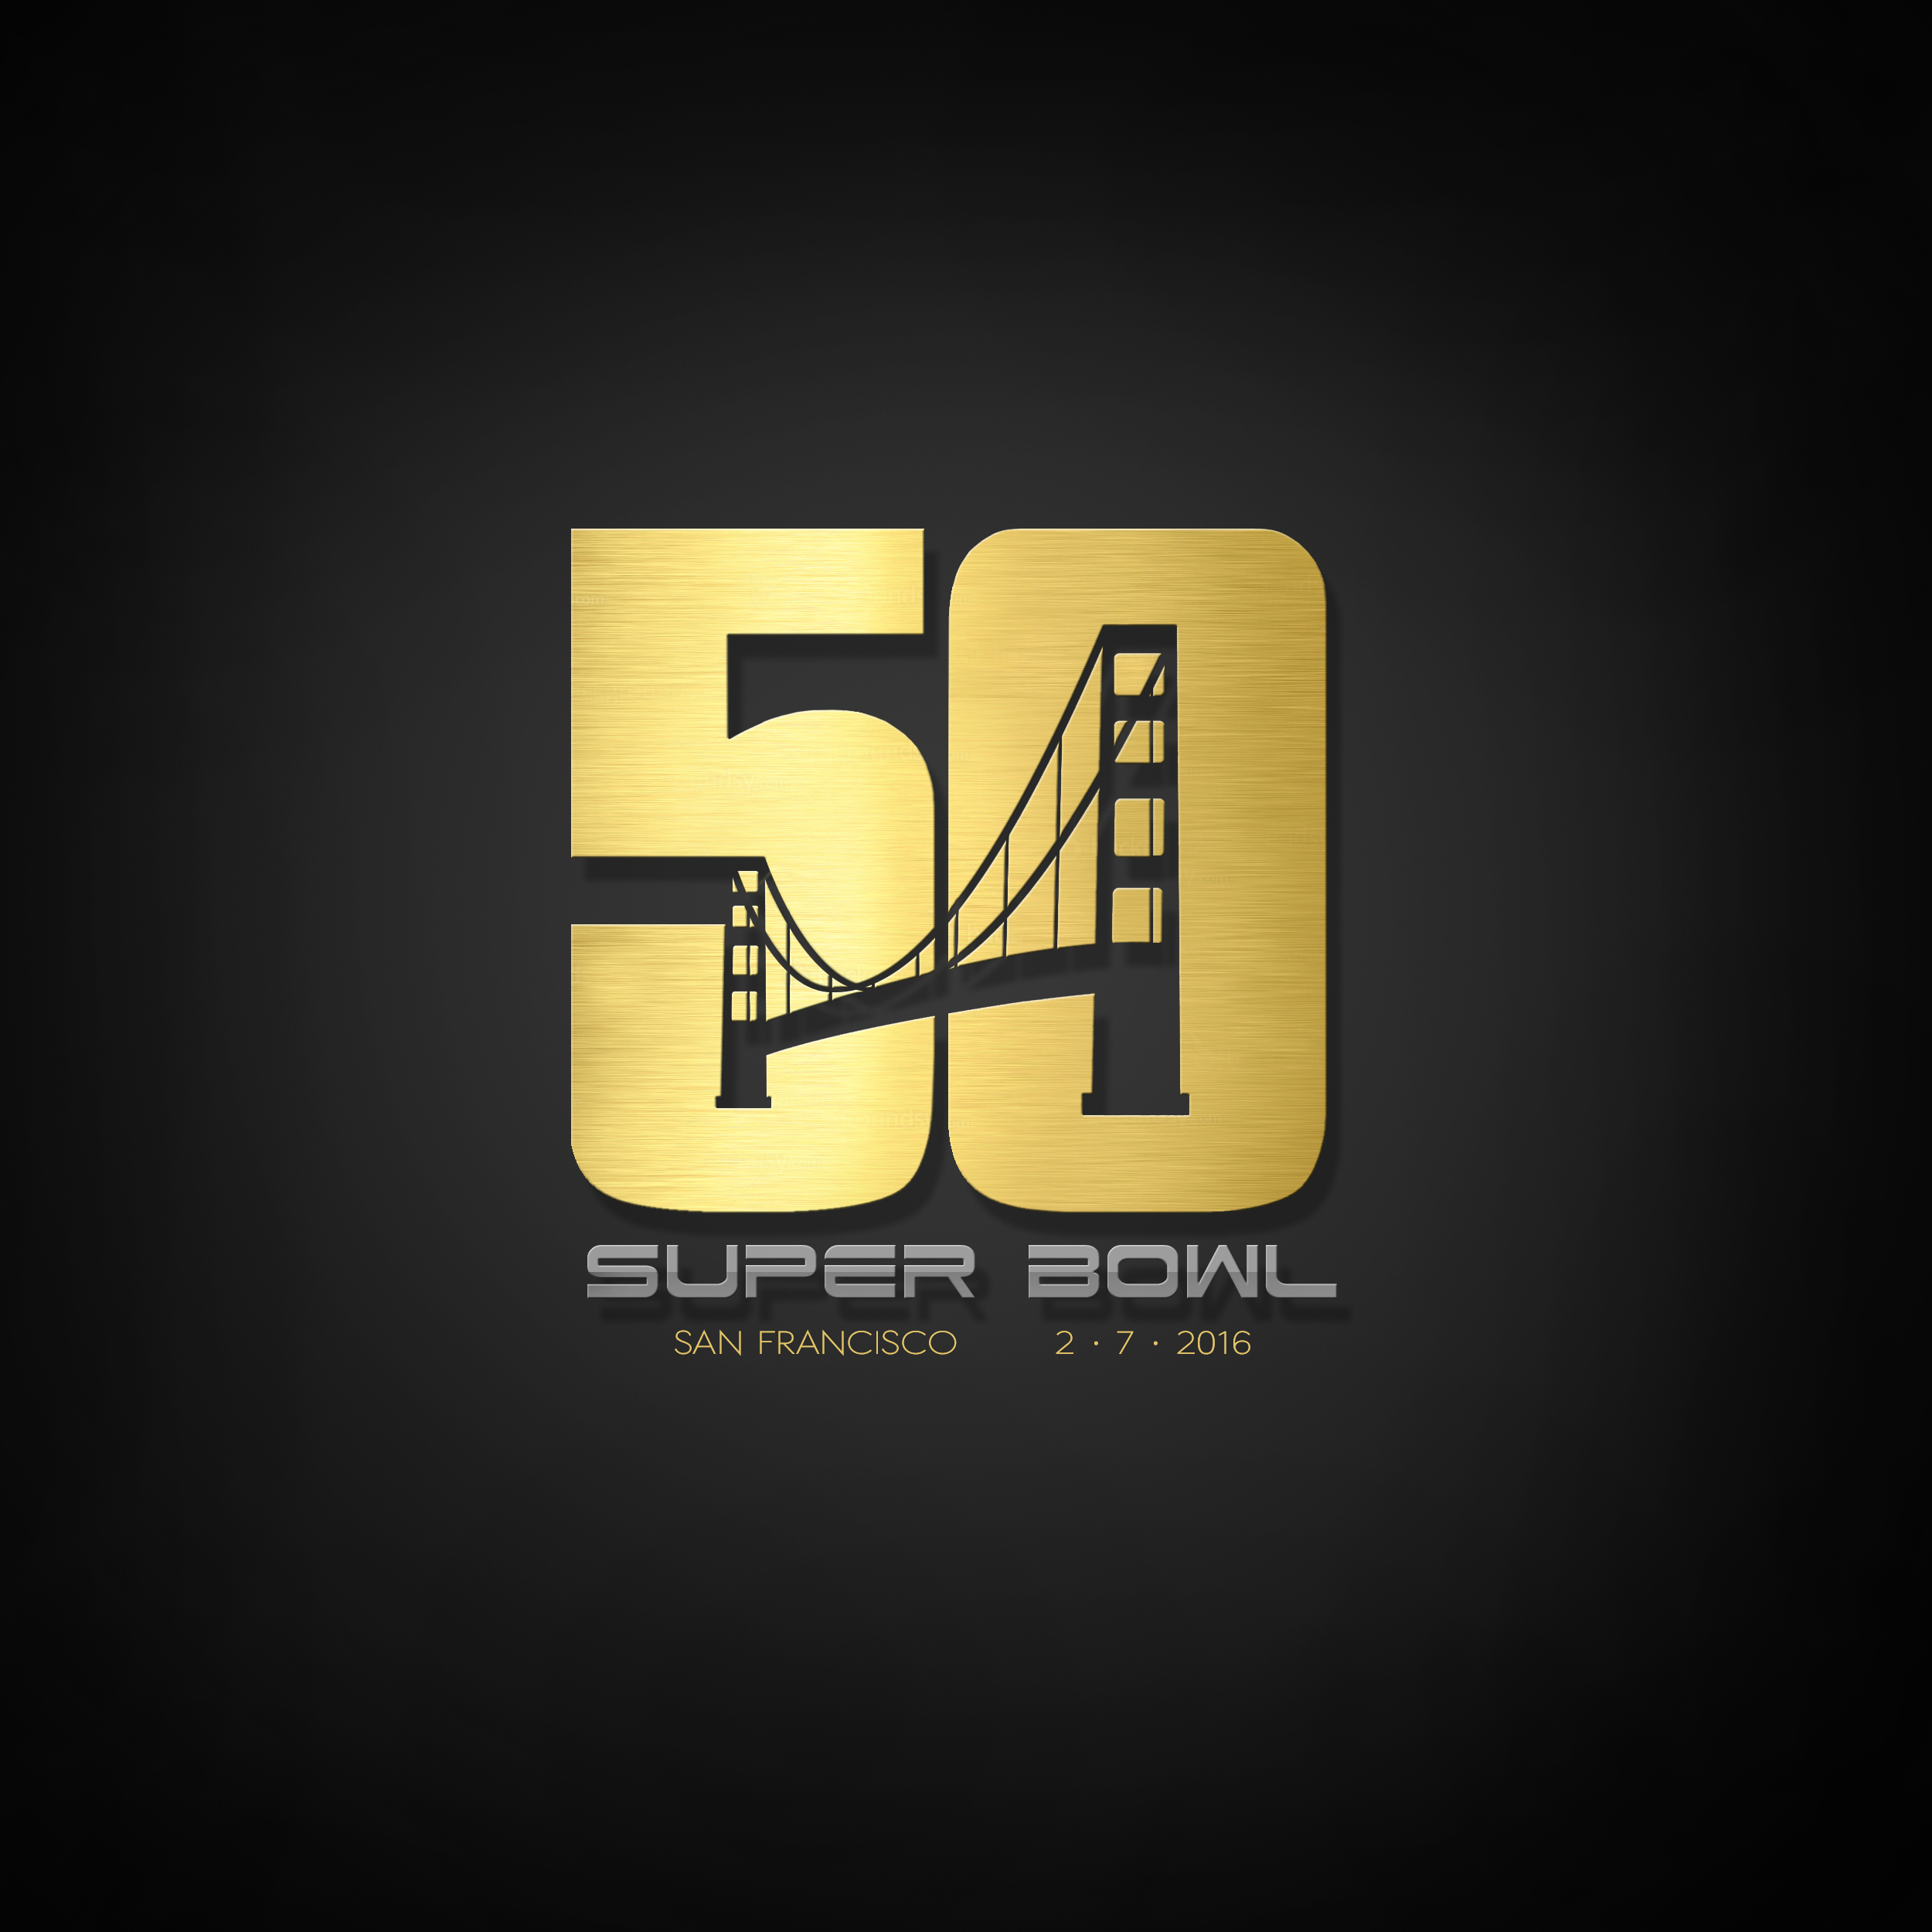 http://dailysnark.com/wp-content/uploads/2015/08/Super-Bowl-50throwaway2.jpg